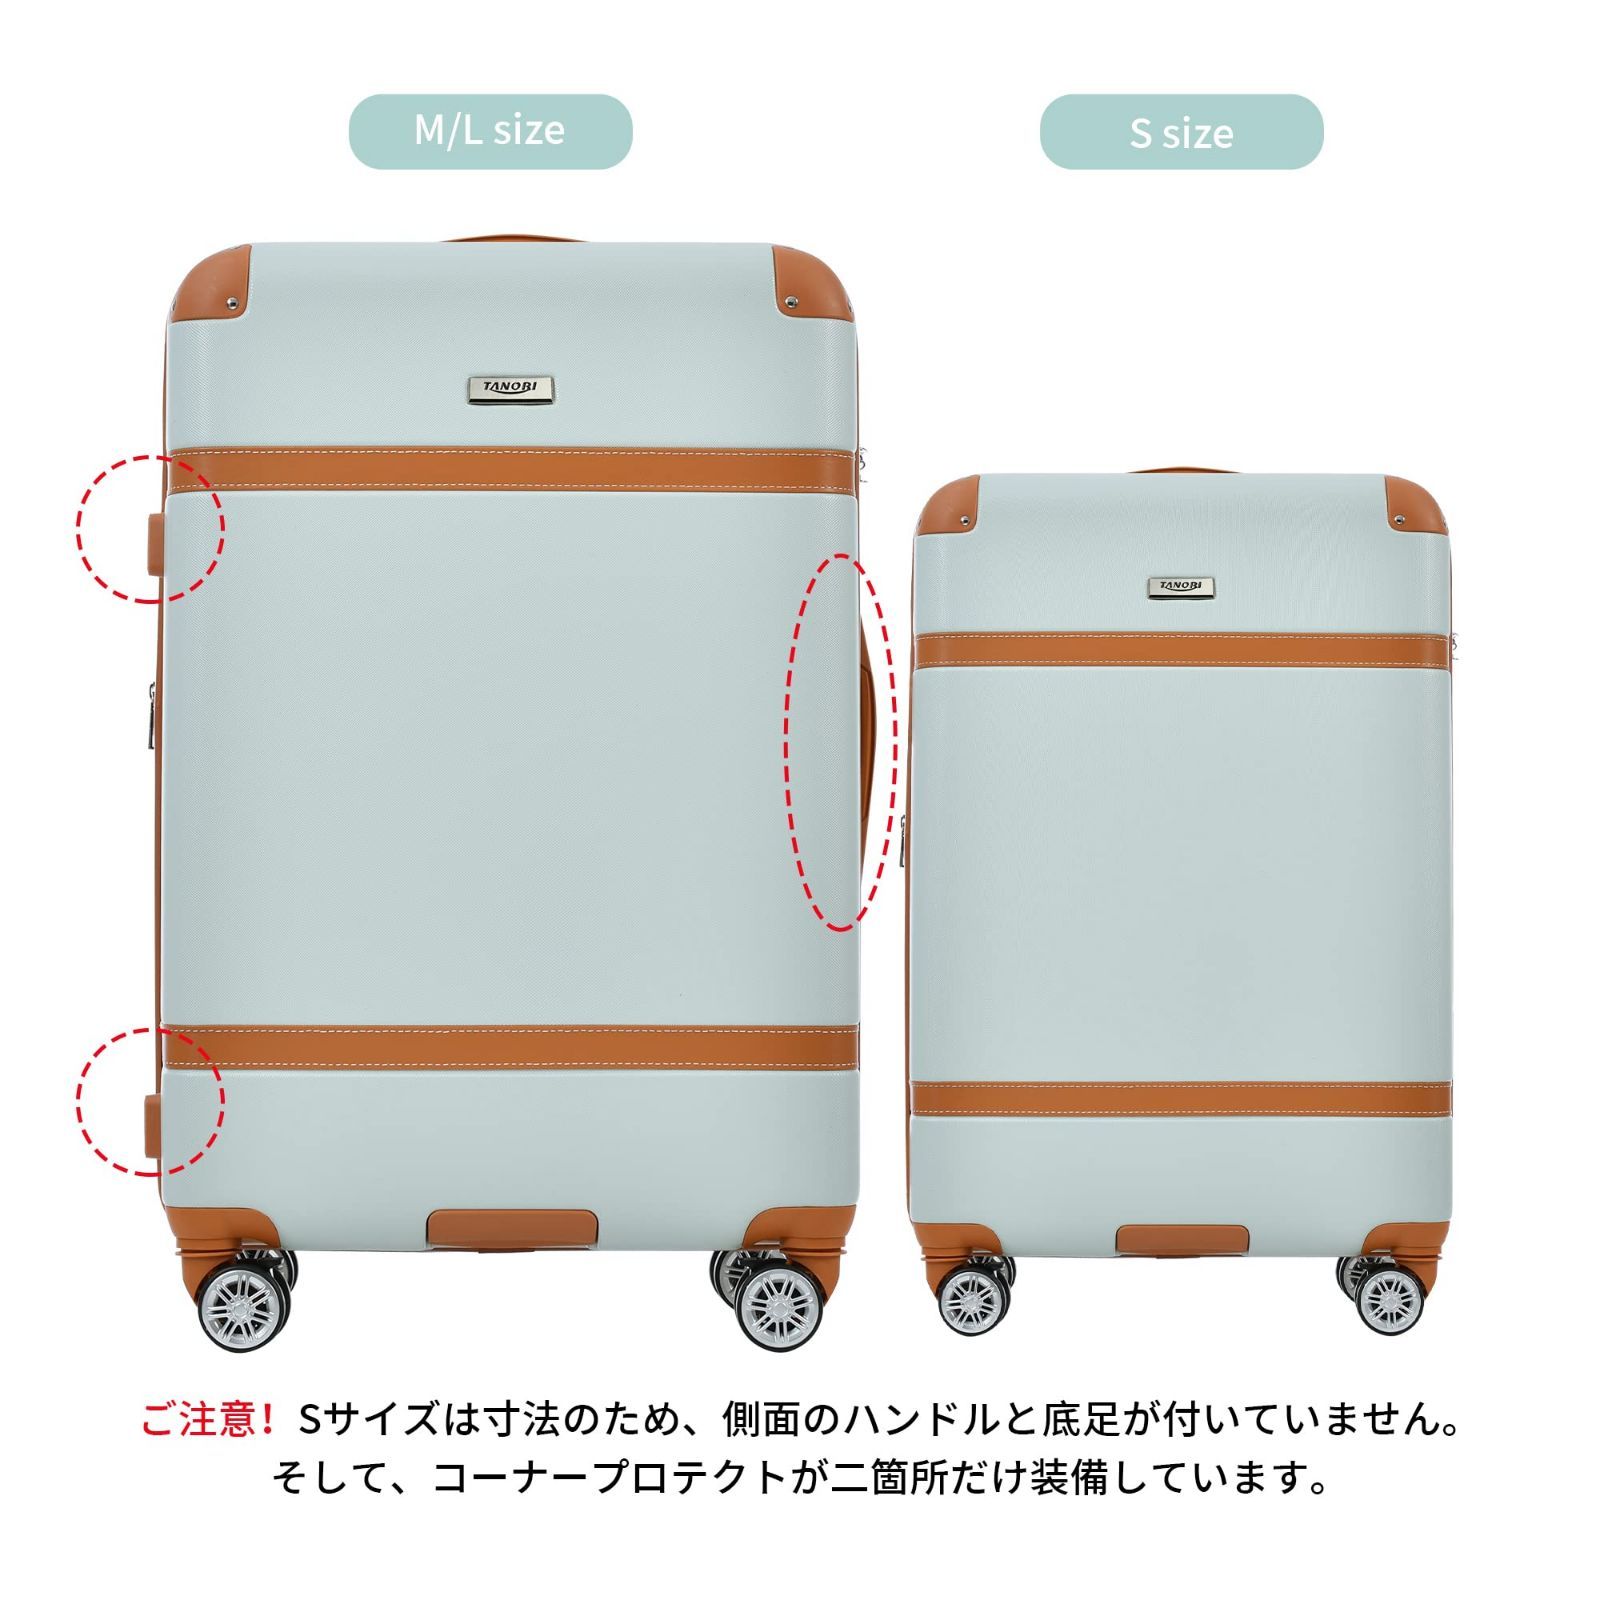 BTM スーツケース キャリーバッグ 機内持ち込み キャリーケース Sサイズ 超軽量 TSAロック 静音 中型 耐衝撃 おしゃれ 旅行 1日